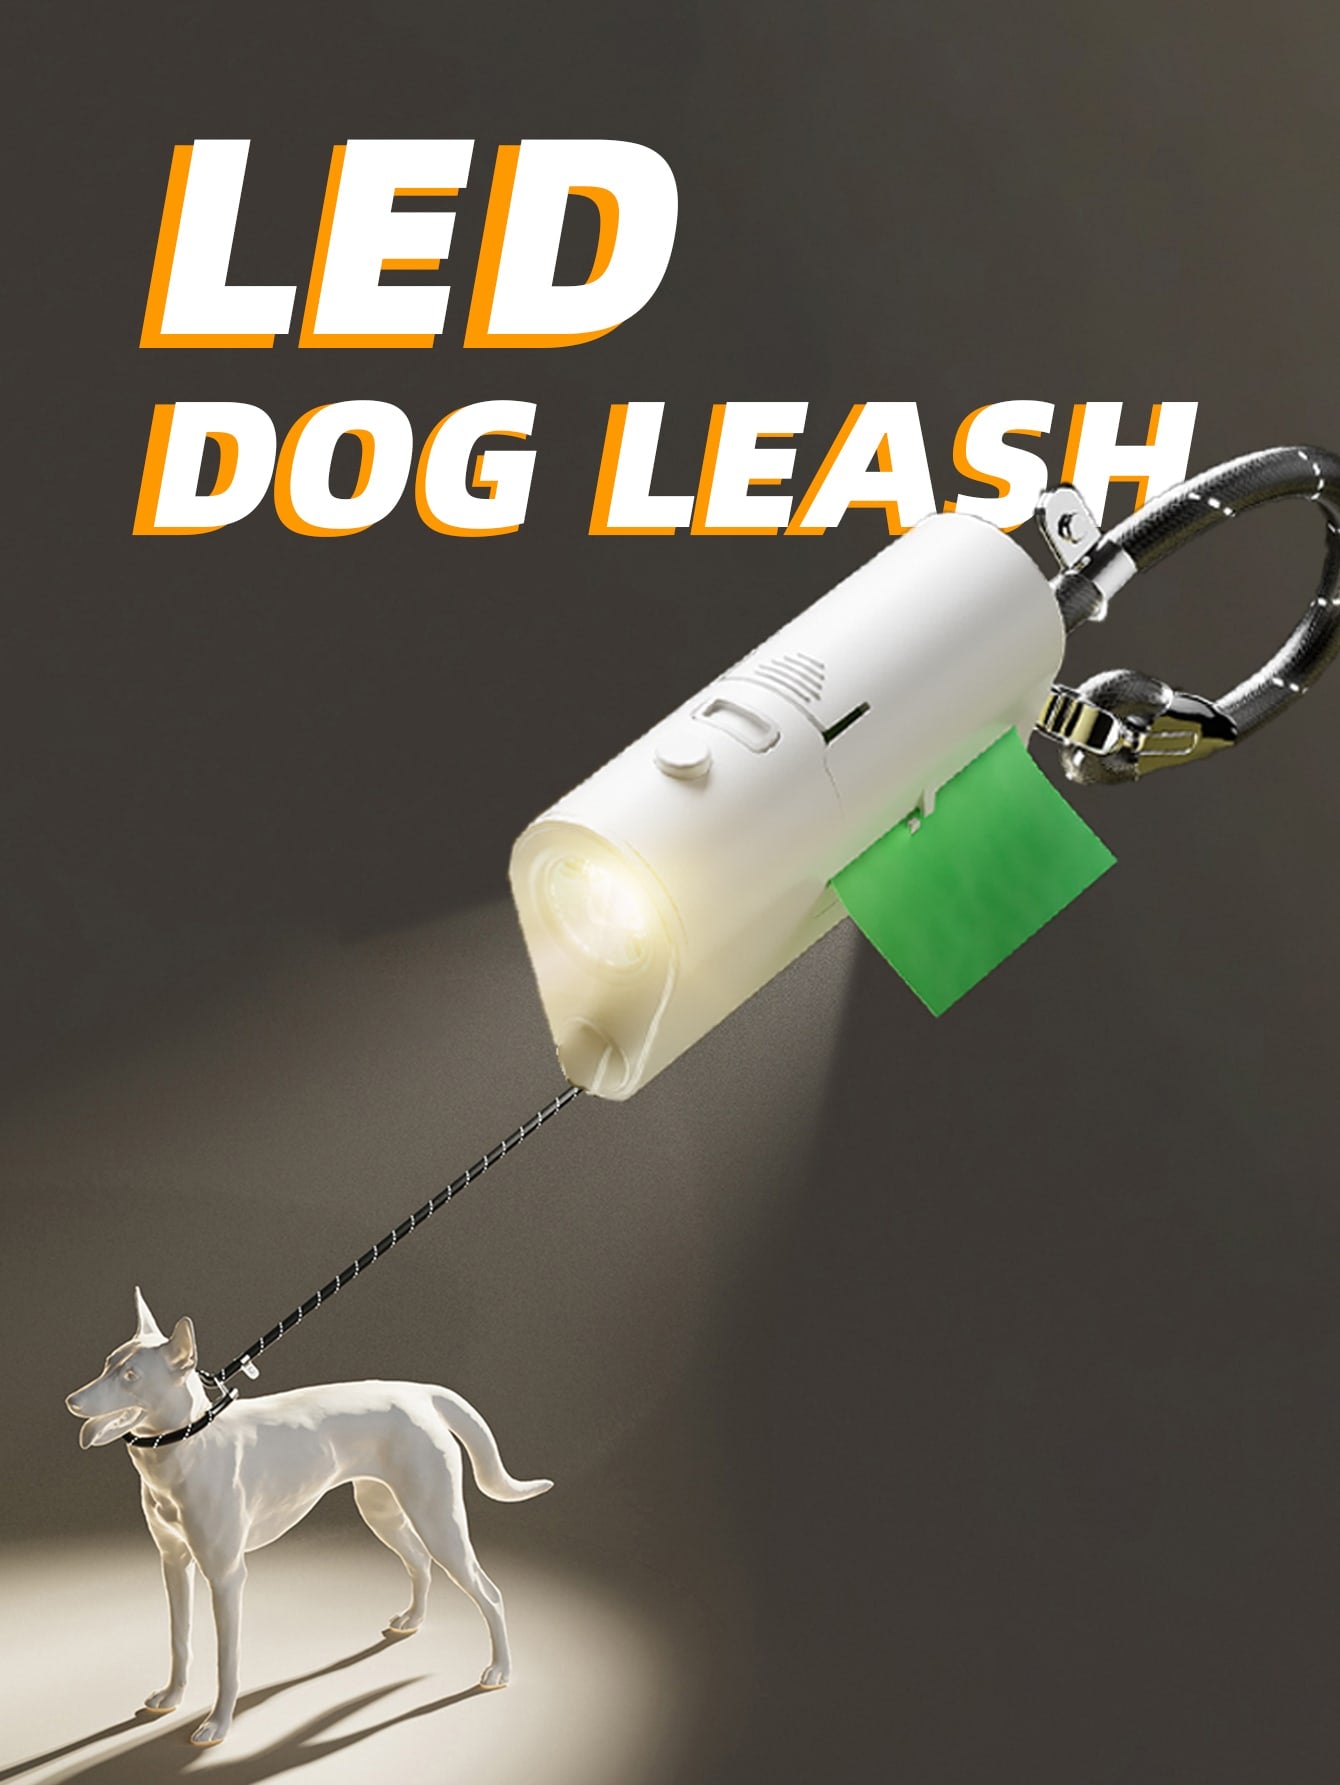 dog leash with flashlight and dog waste bag dispenser